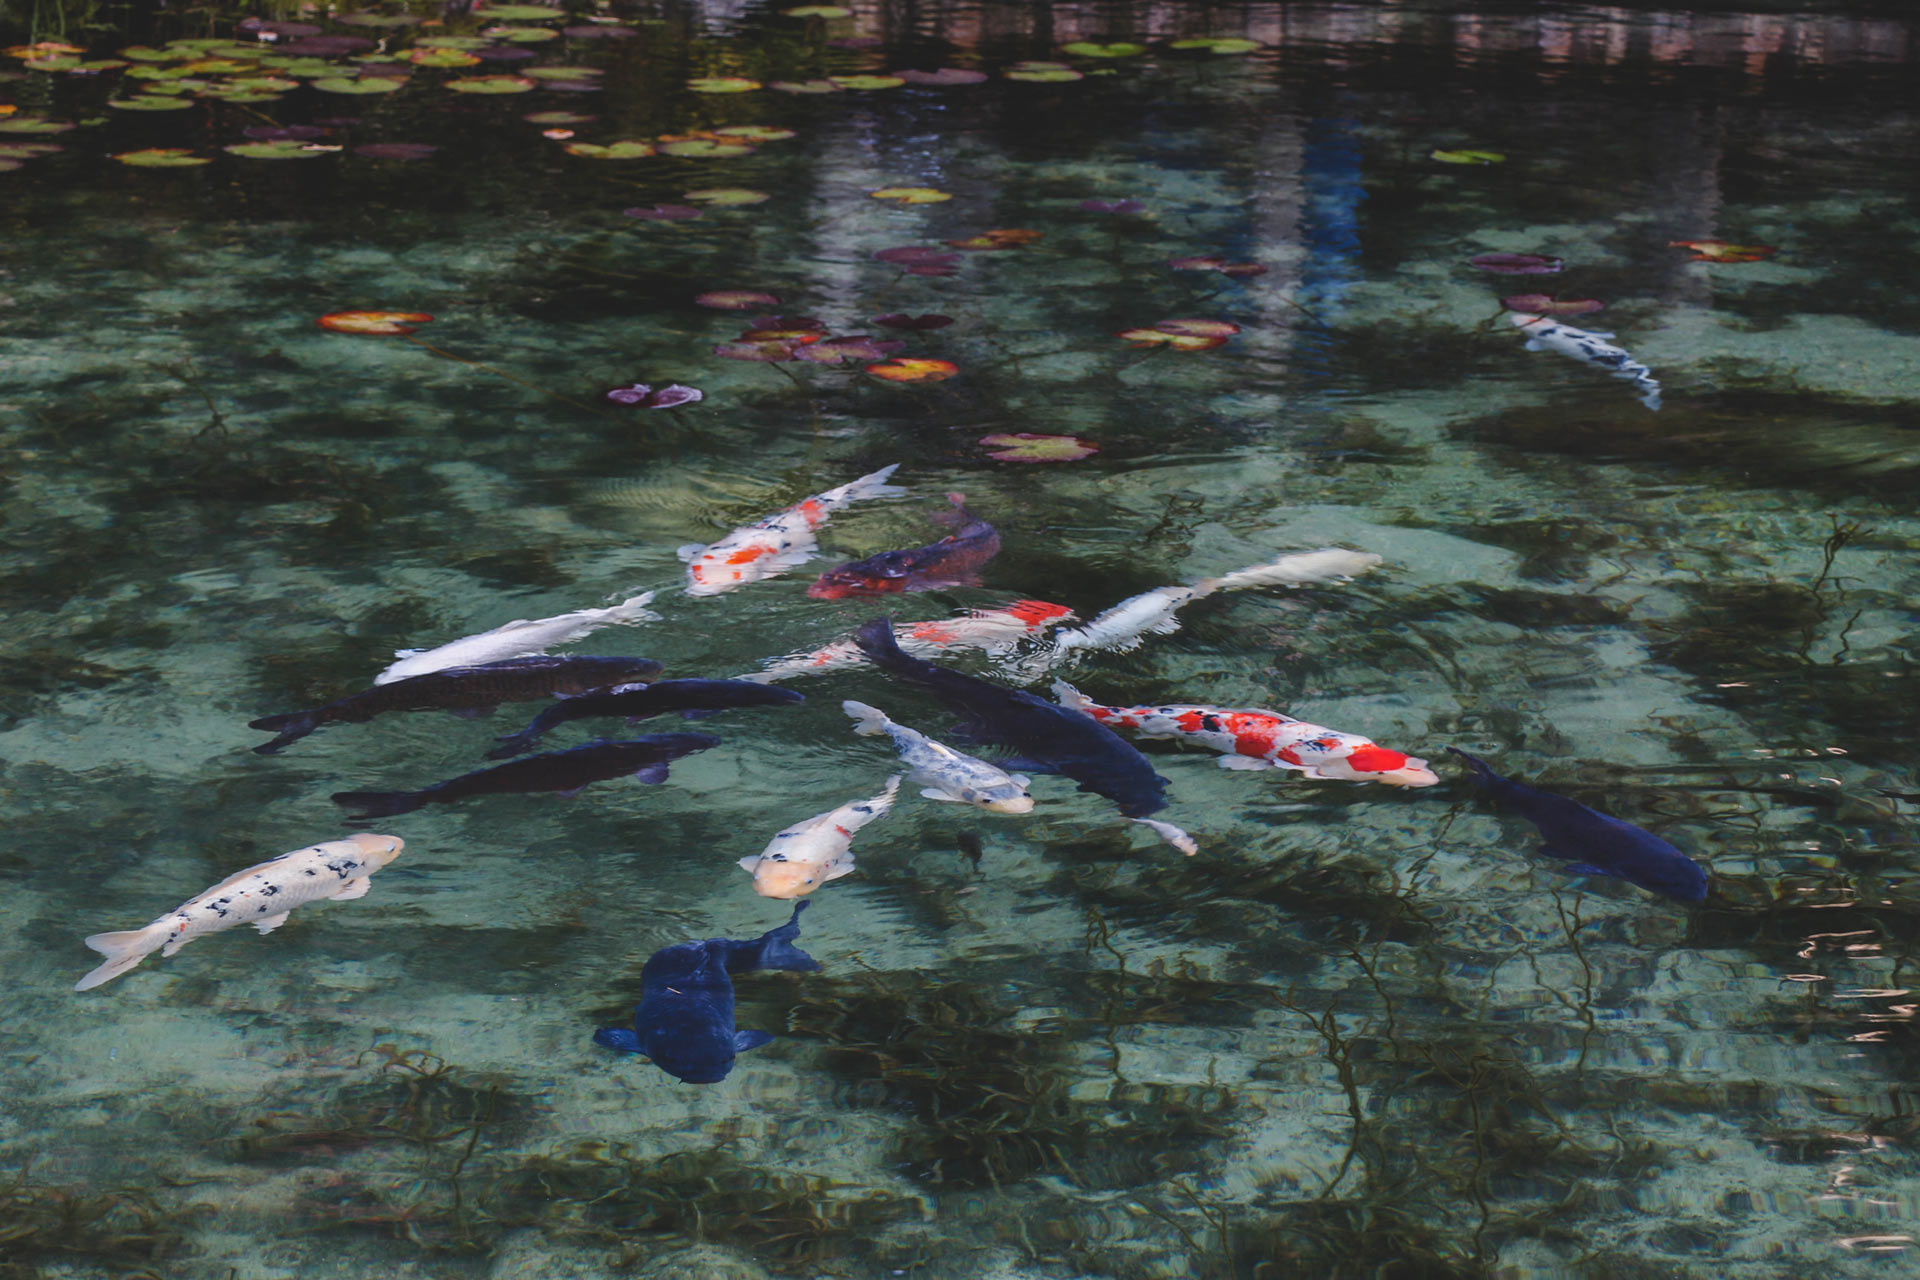 Monet's Pond, Japan